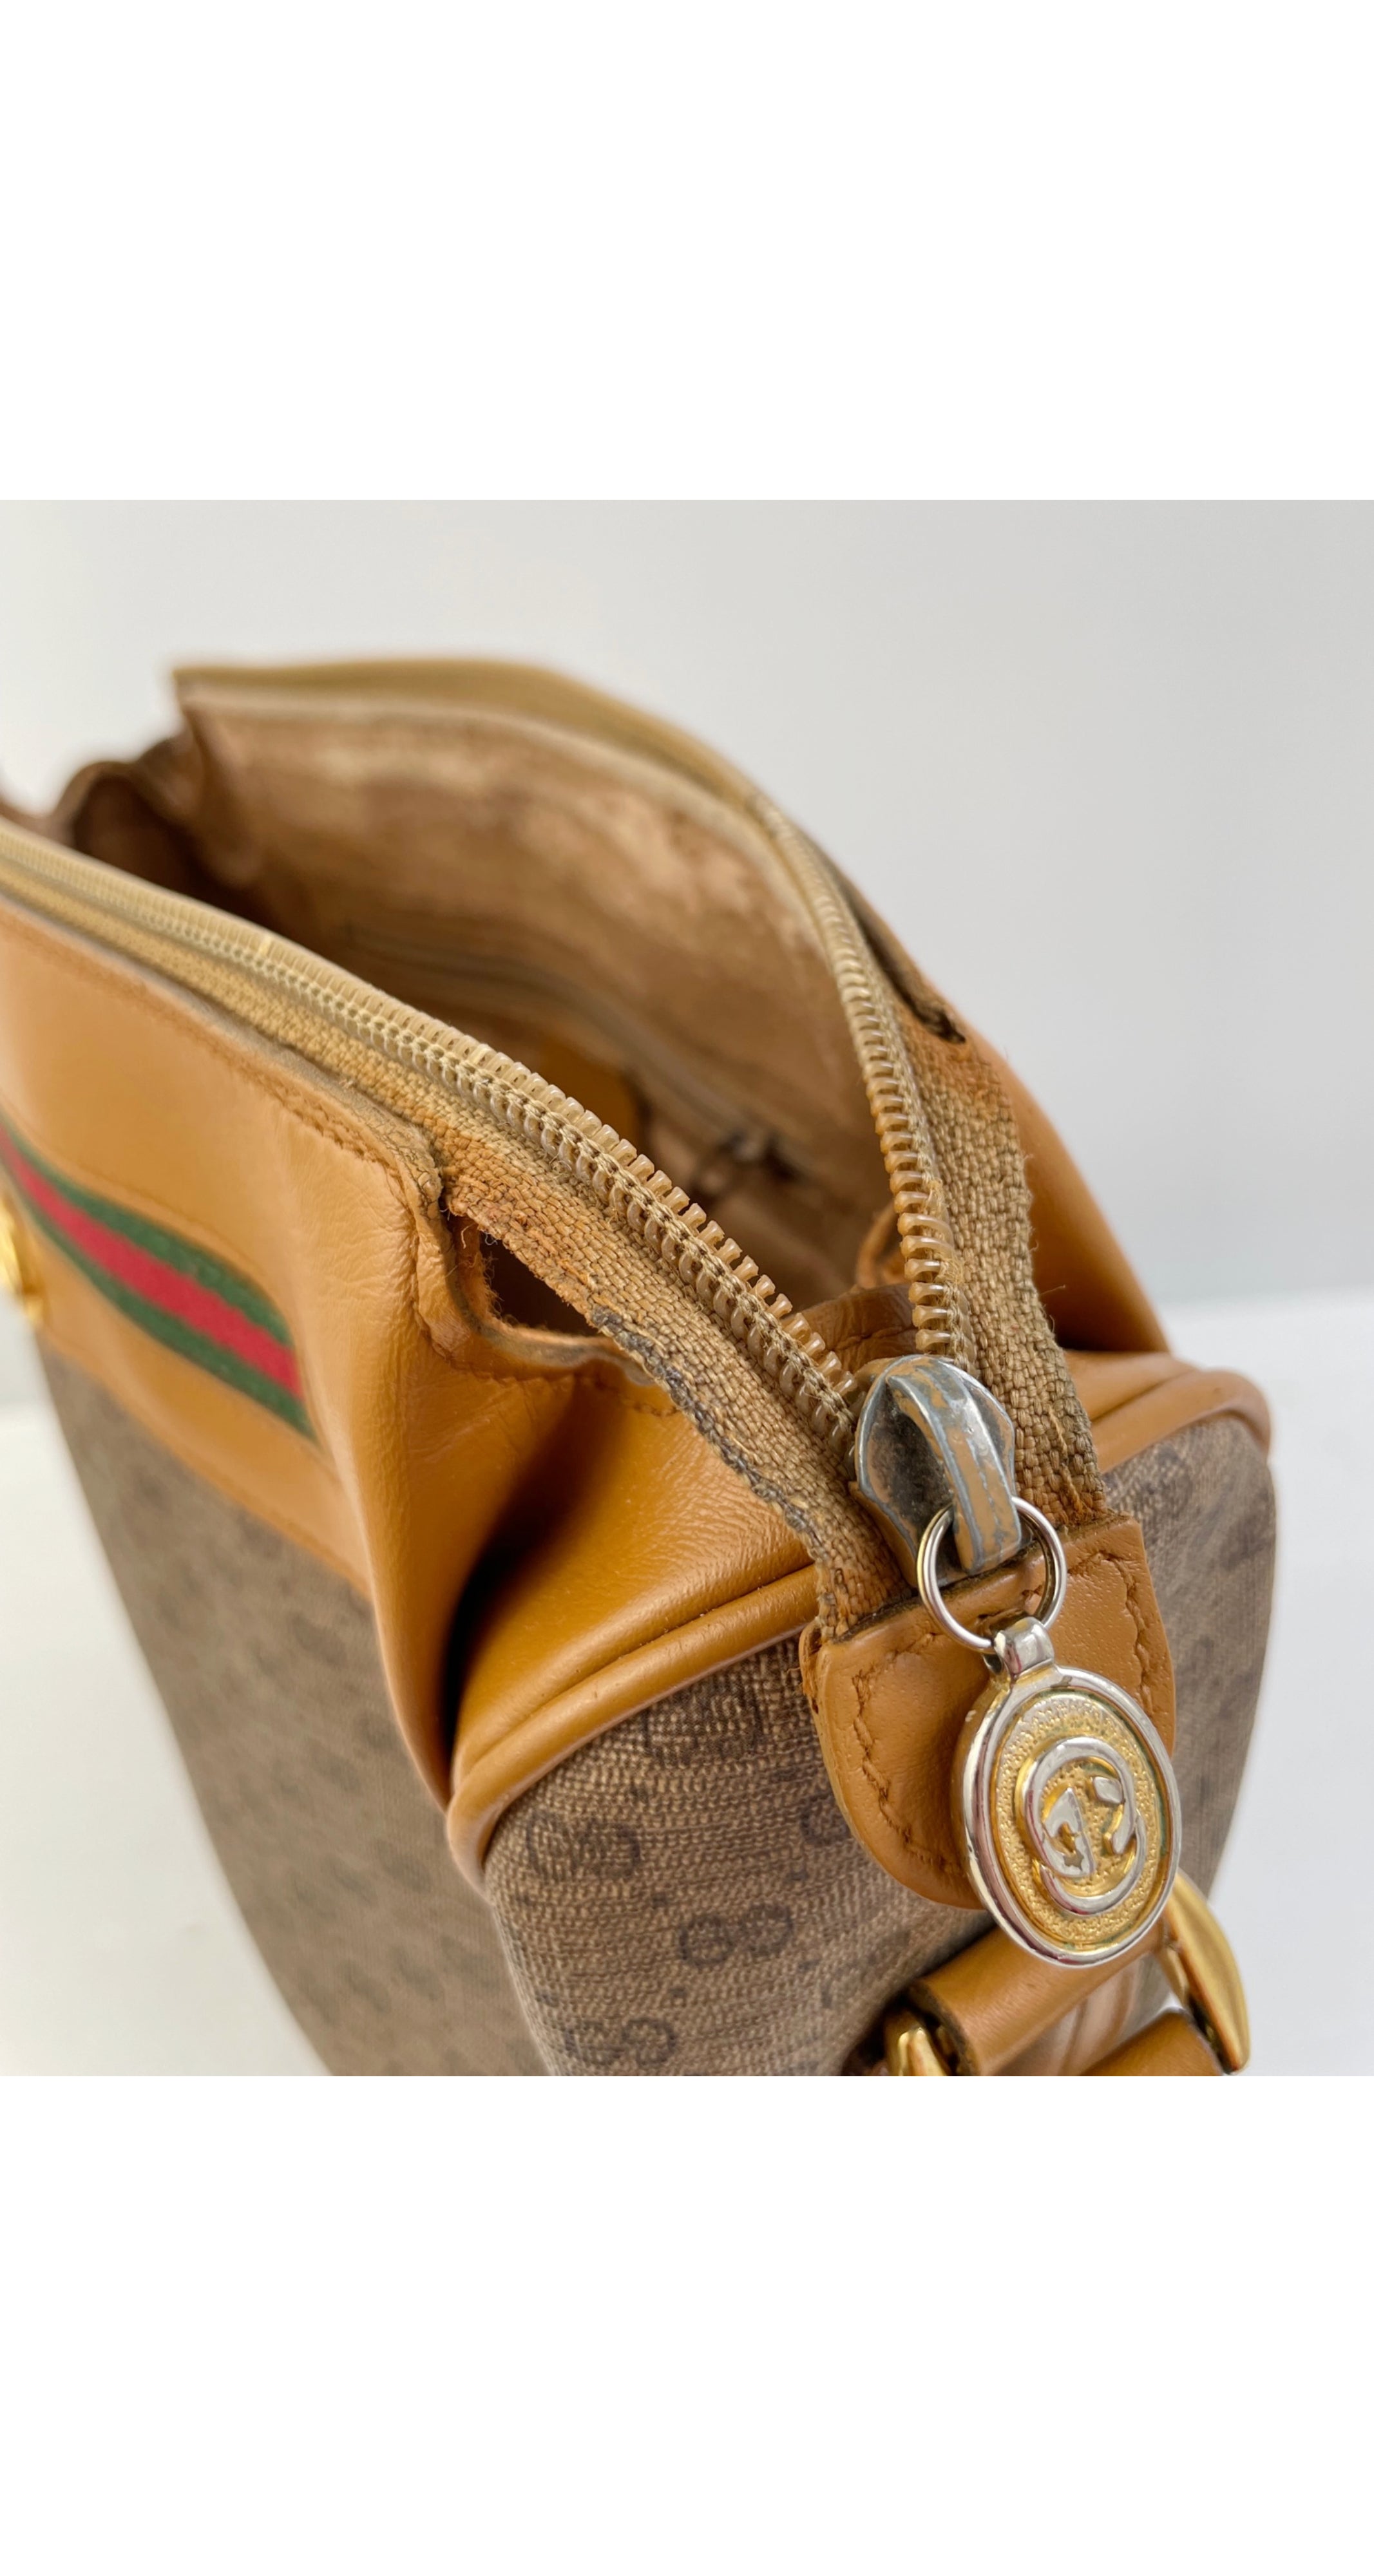 Vintage Gucci 1980s Signature GG Crossbody Handbag